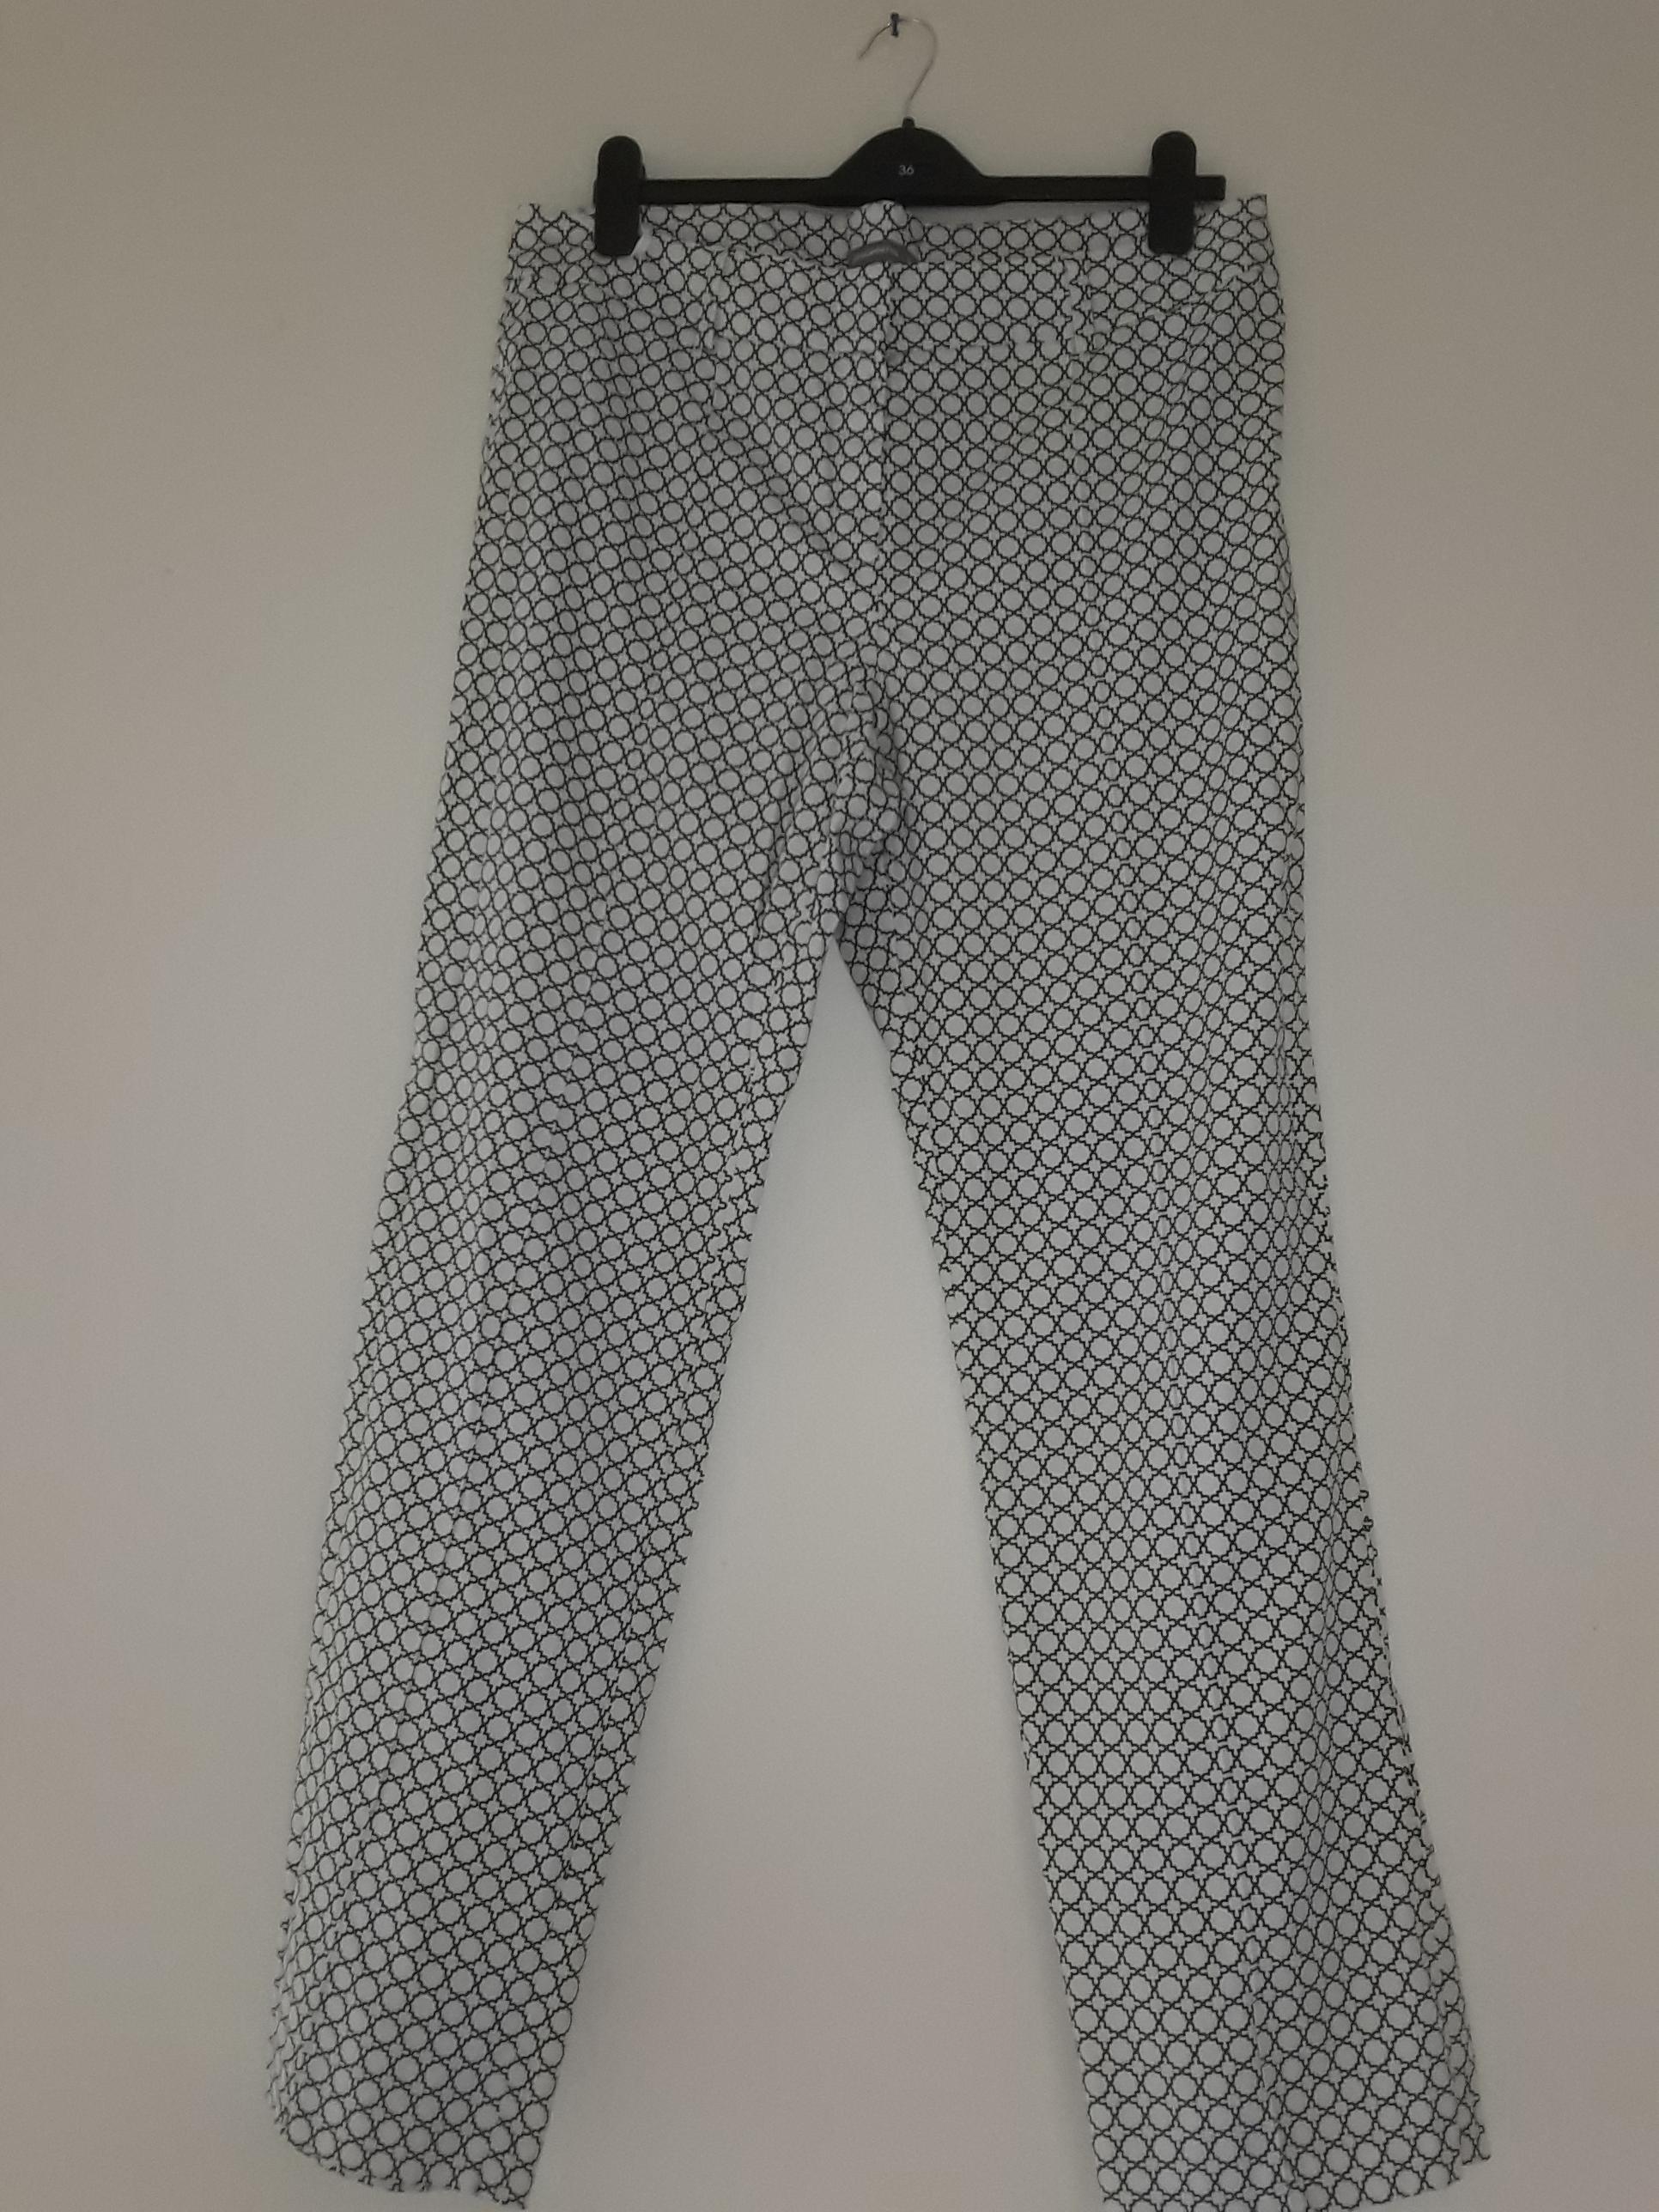 Woolworths patterned denim pants